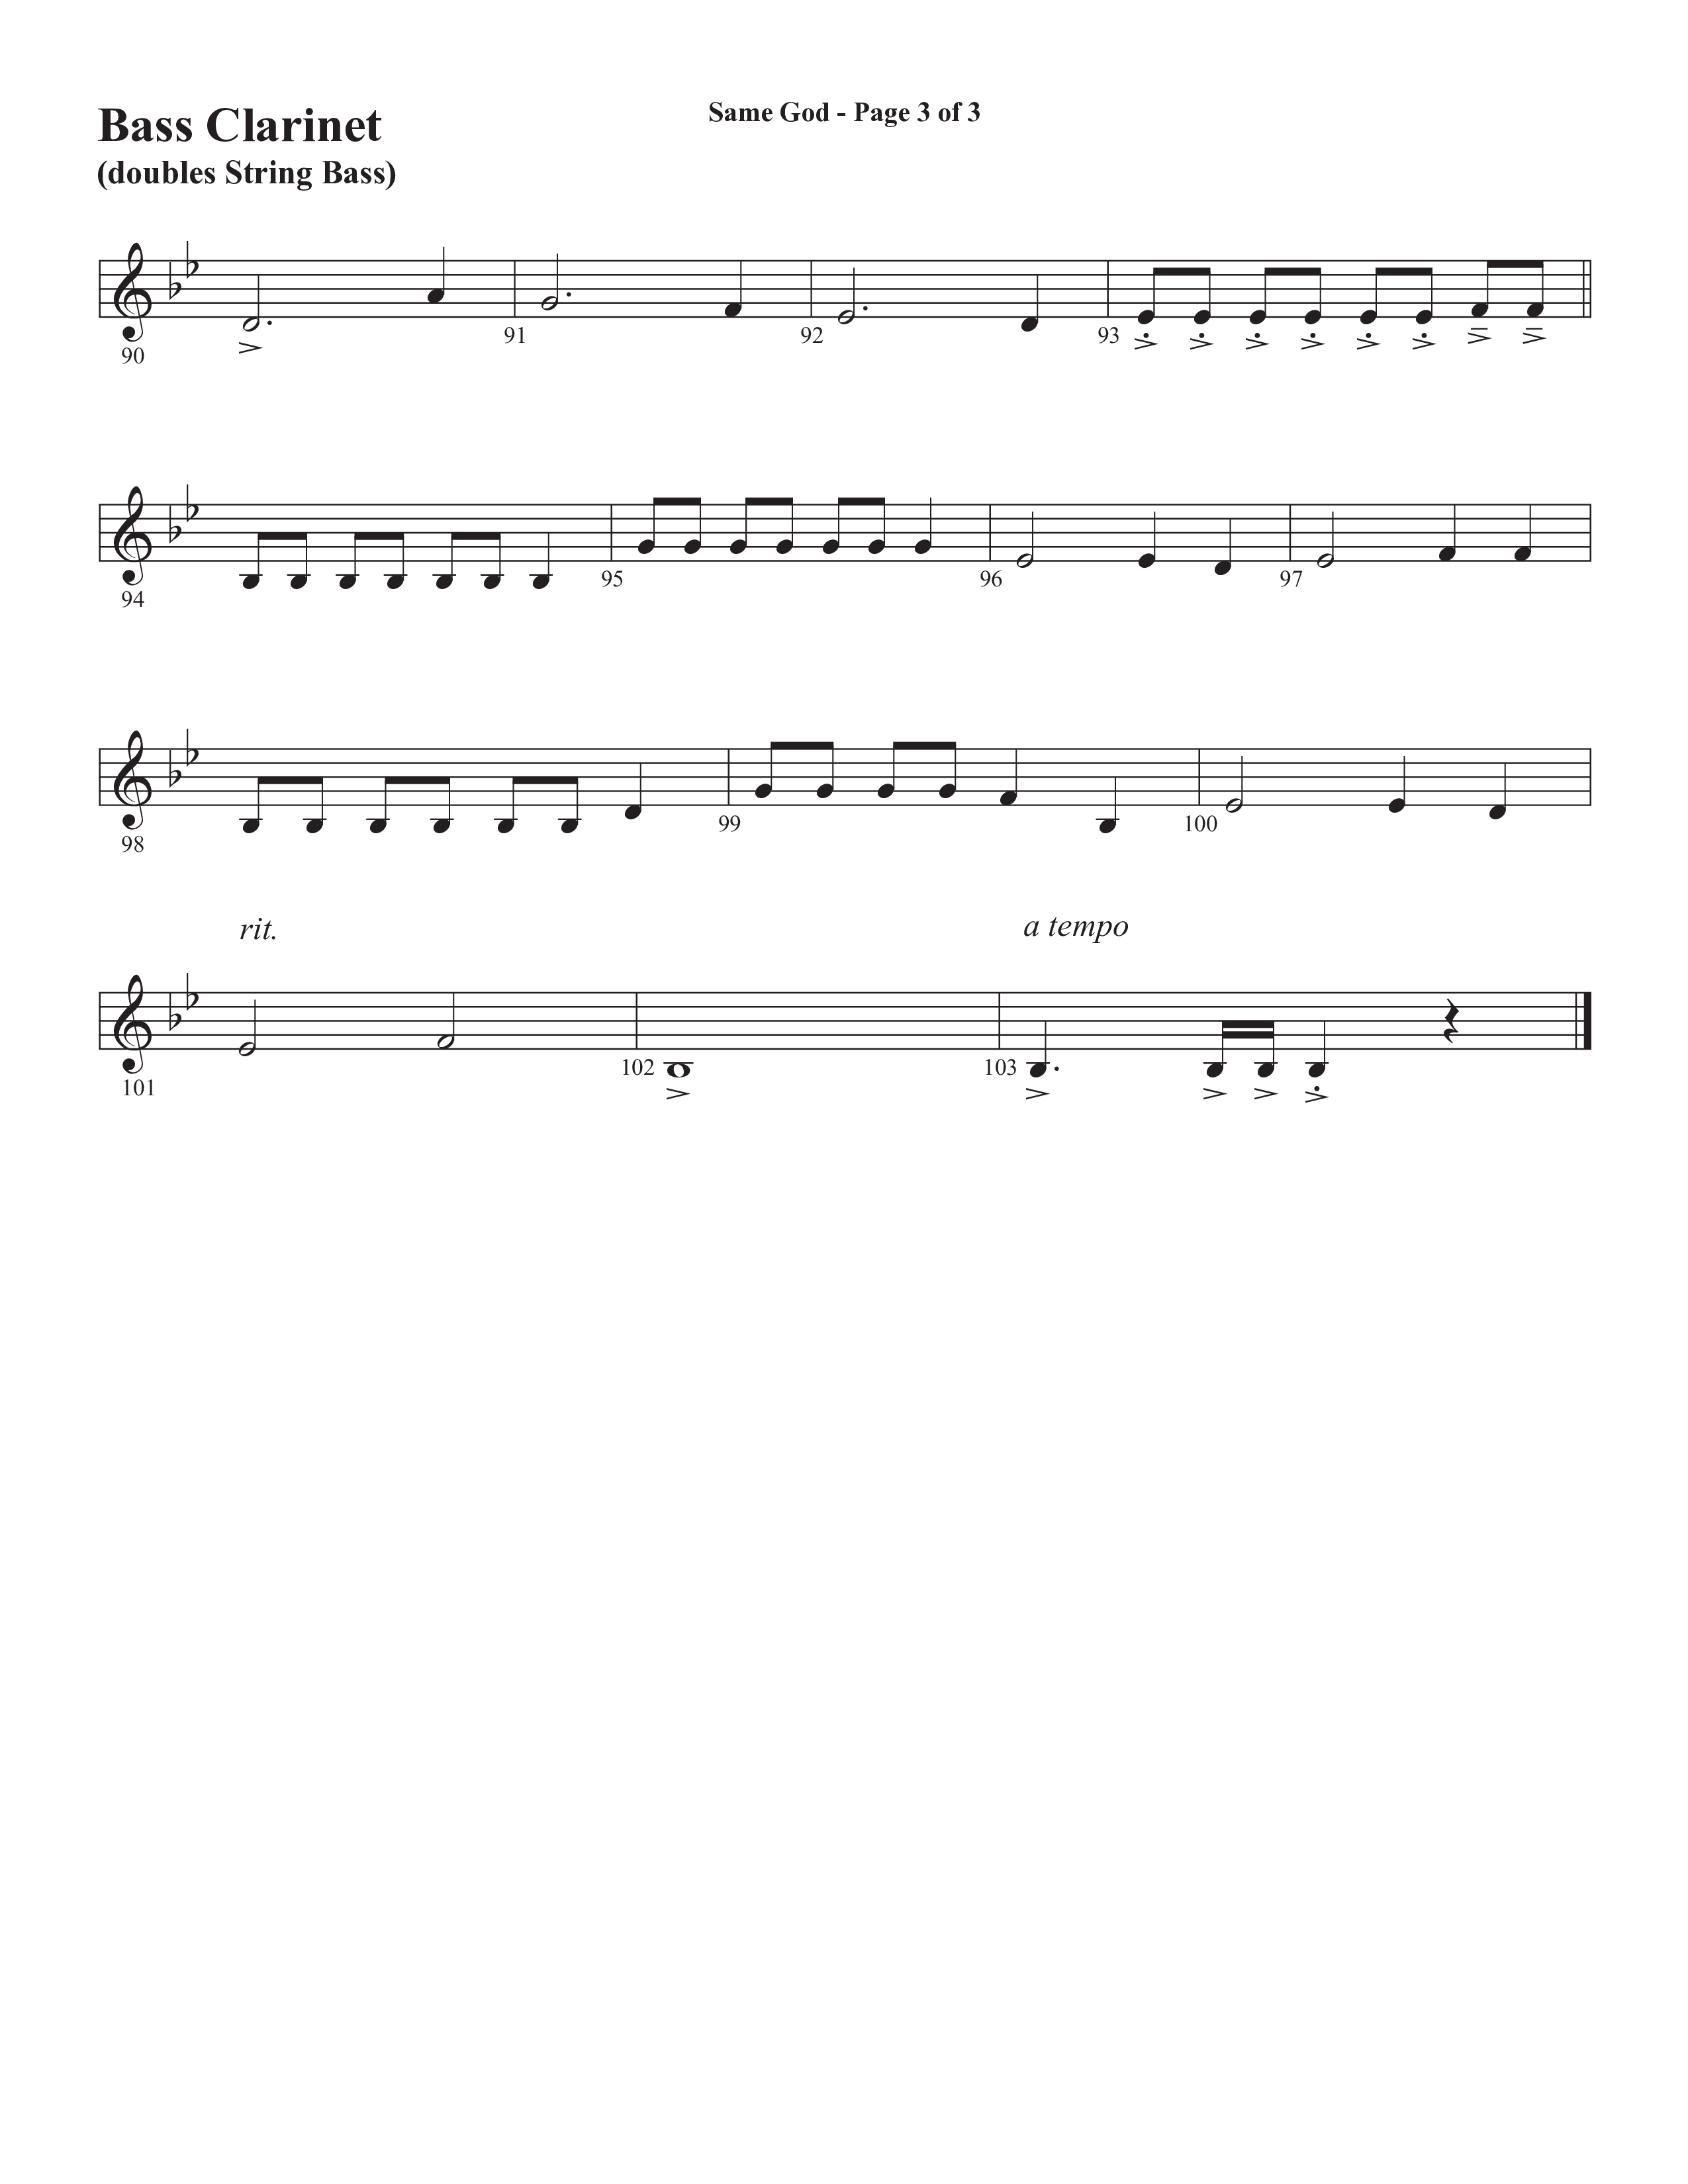 Same God (Choral Anthem SATB) Bass Clarinet (Semsen Music / Arr. Phil Nitz)